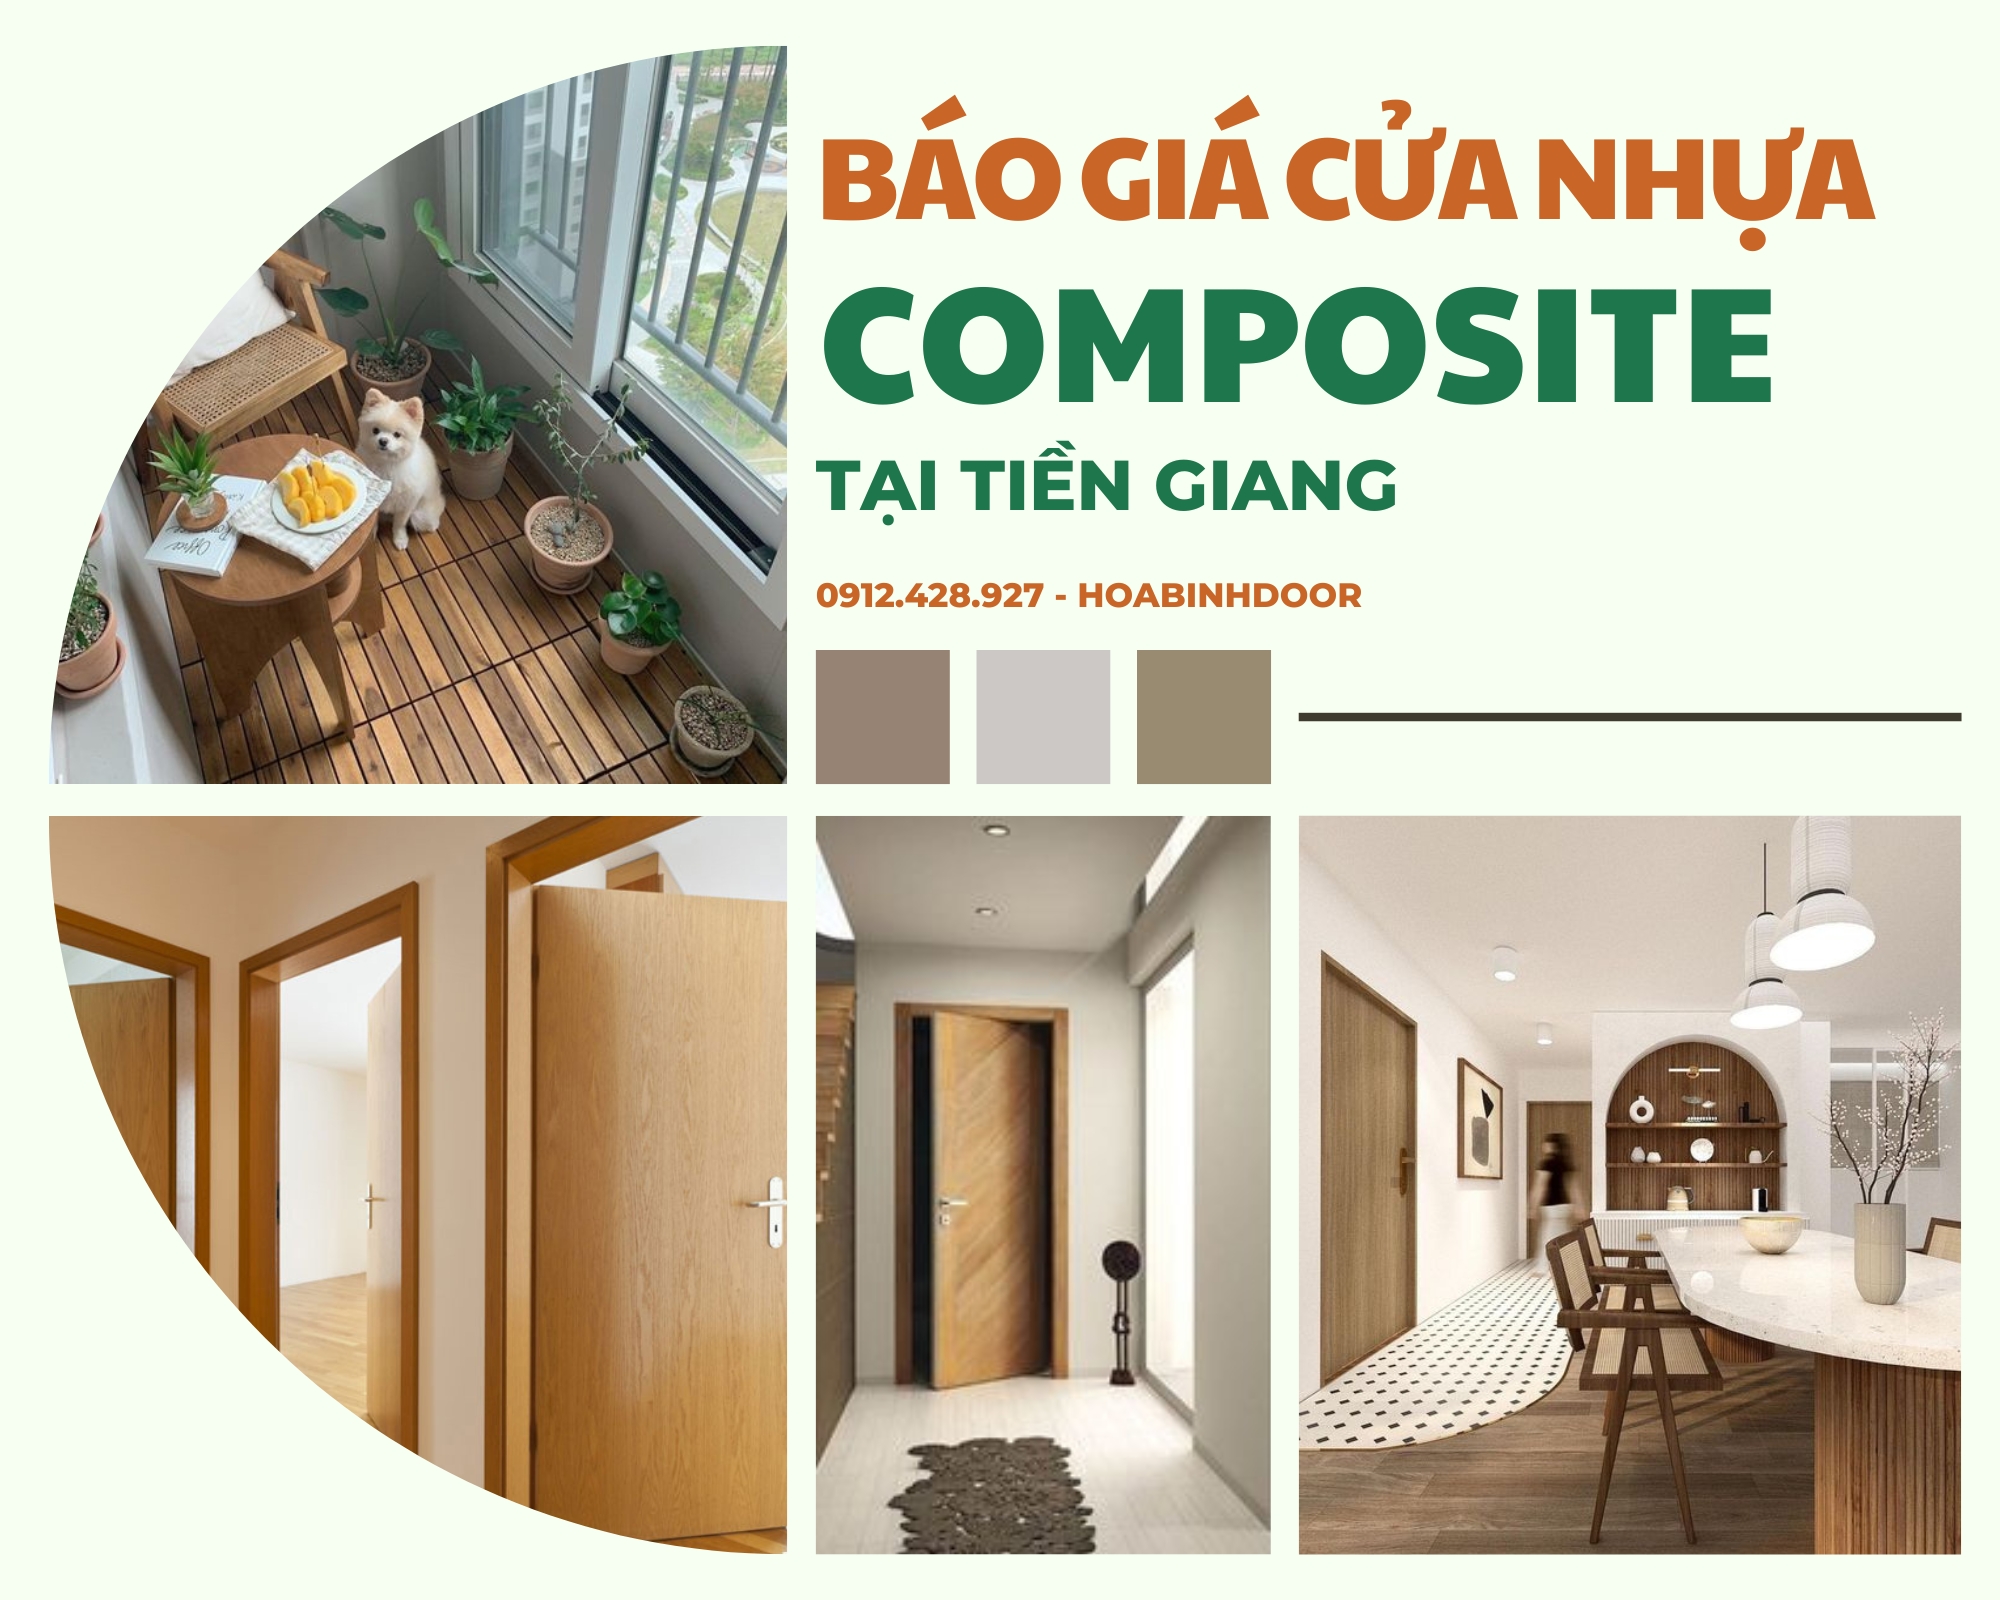 Cửa nhựa Composite tại Tiền Giang | Cửa nhựa giả gỗ